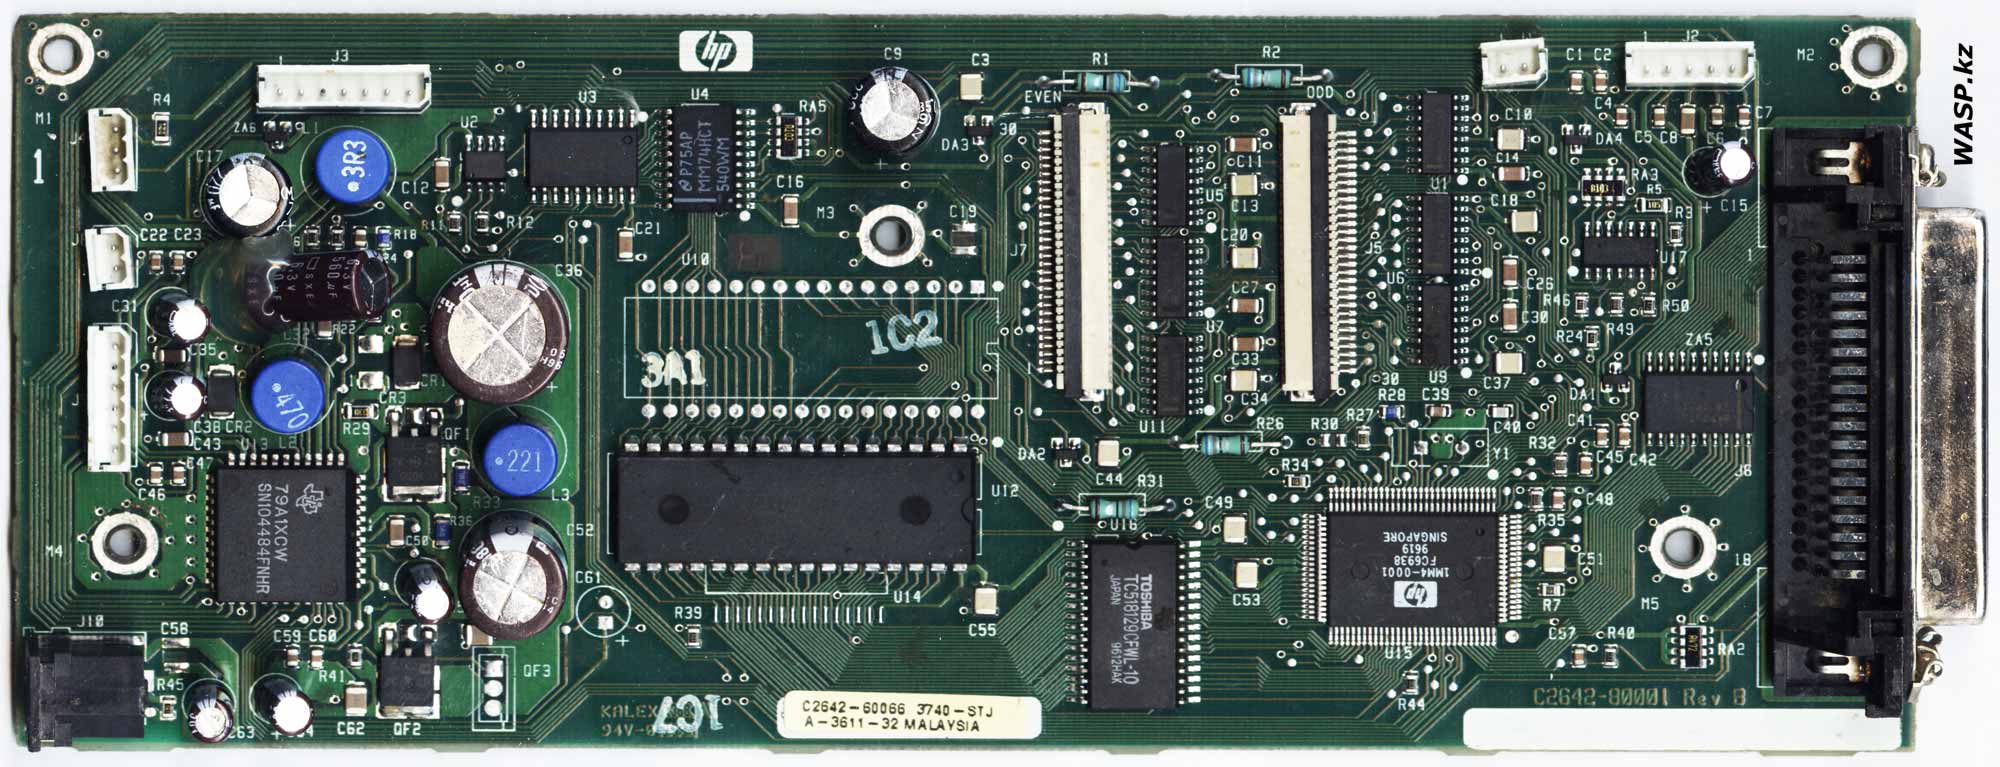 C2642-60066 плата контроллера HP DeskJet 400